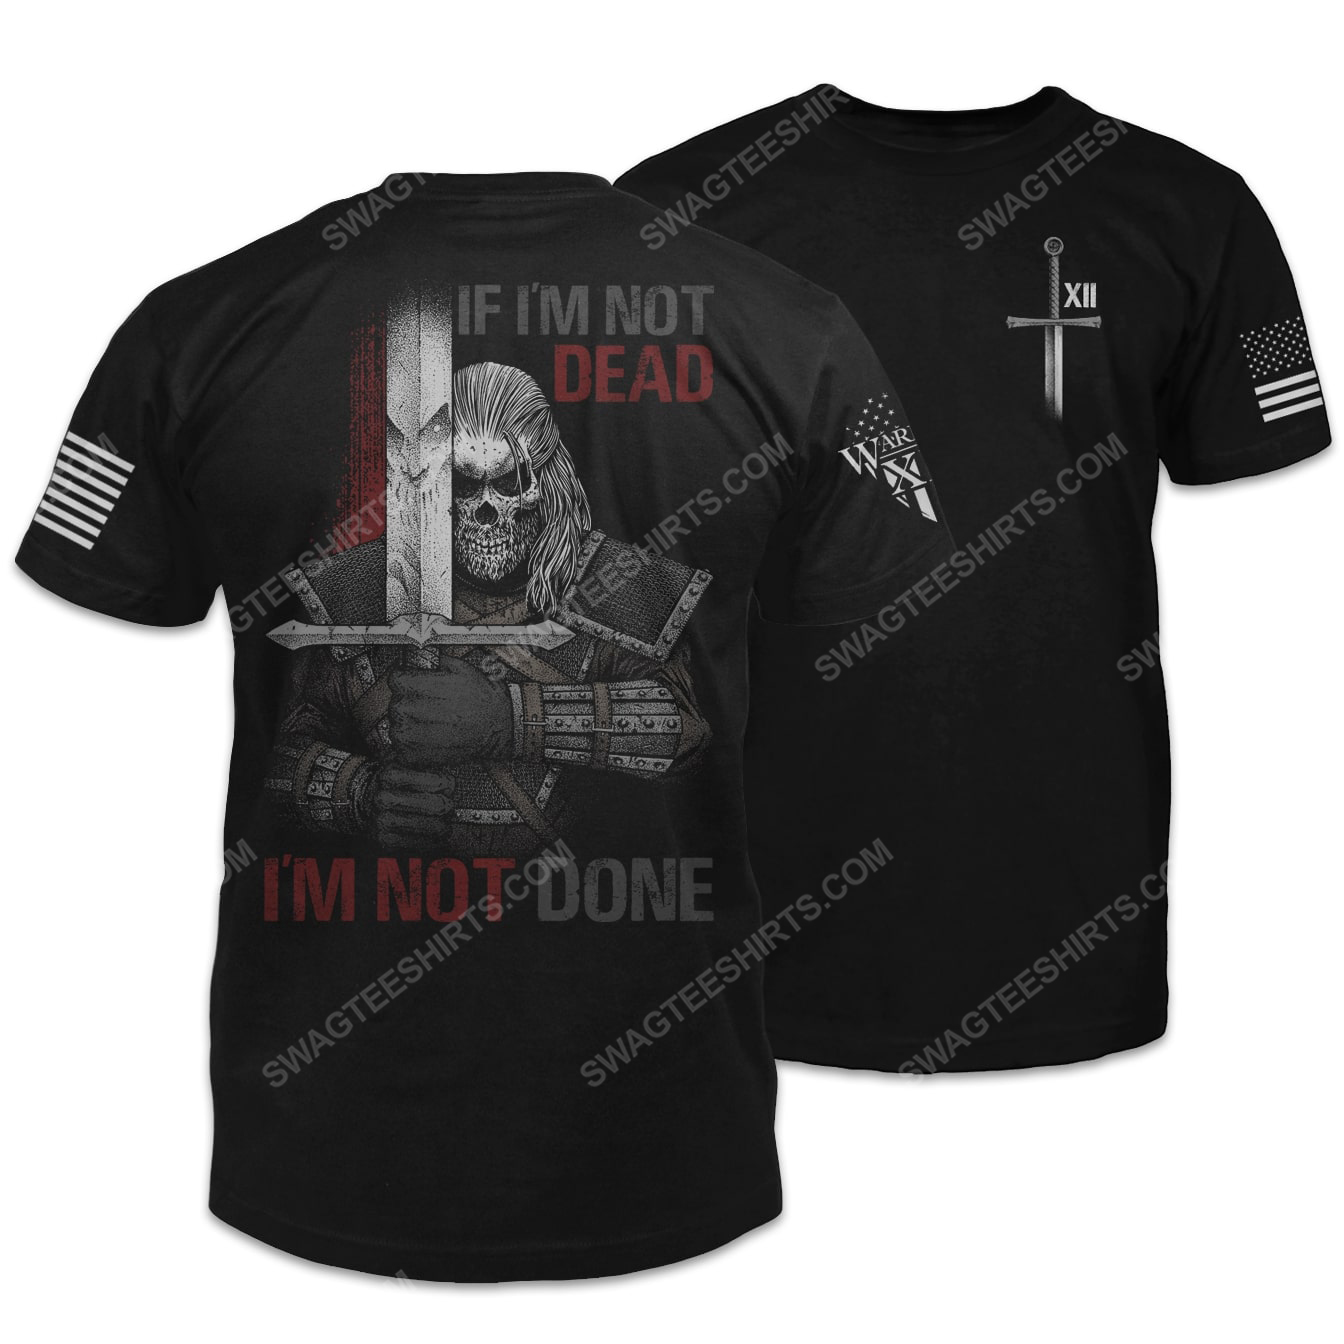 If i'm not dead i'm not done warriors skull shirt 2(1)